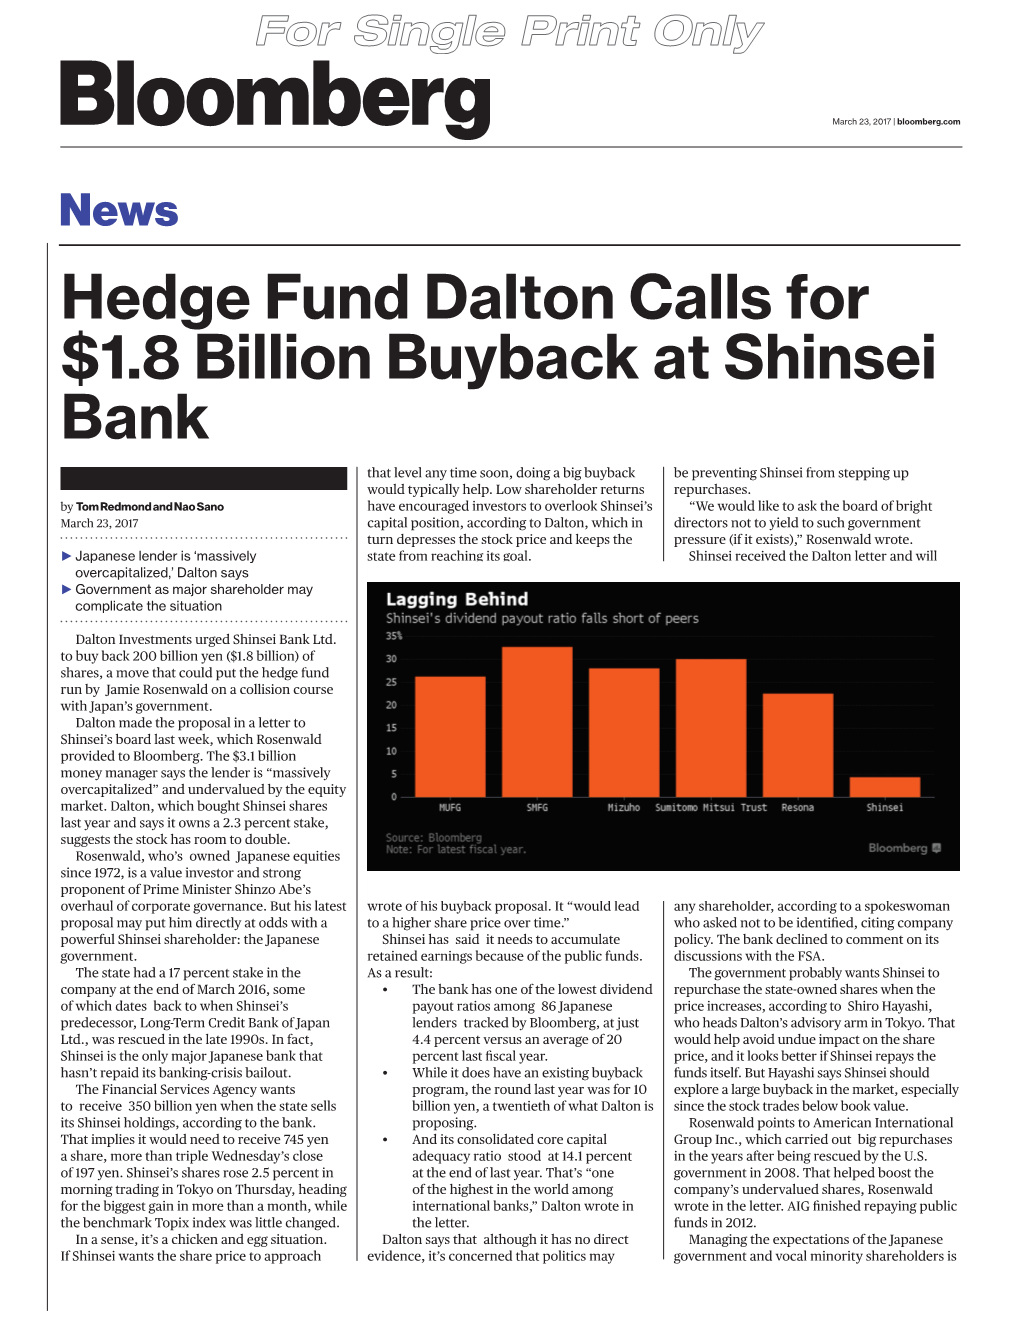 Hedge Fund Dalton Calls for $1.8 Billion Buyback at Shinsei Bank